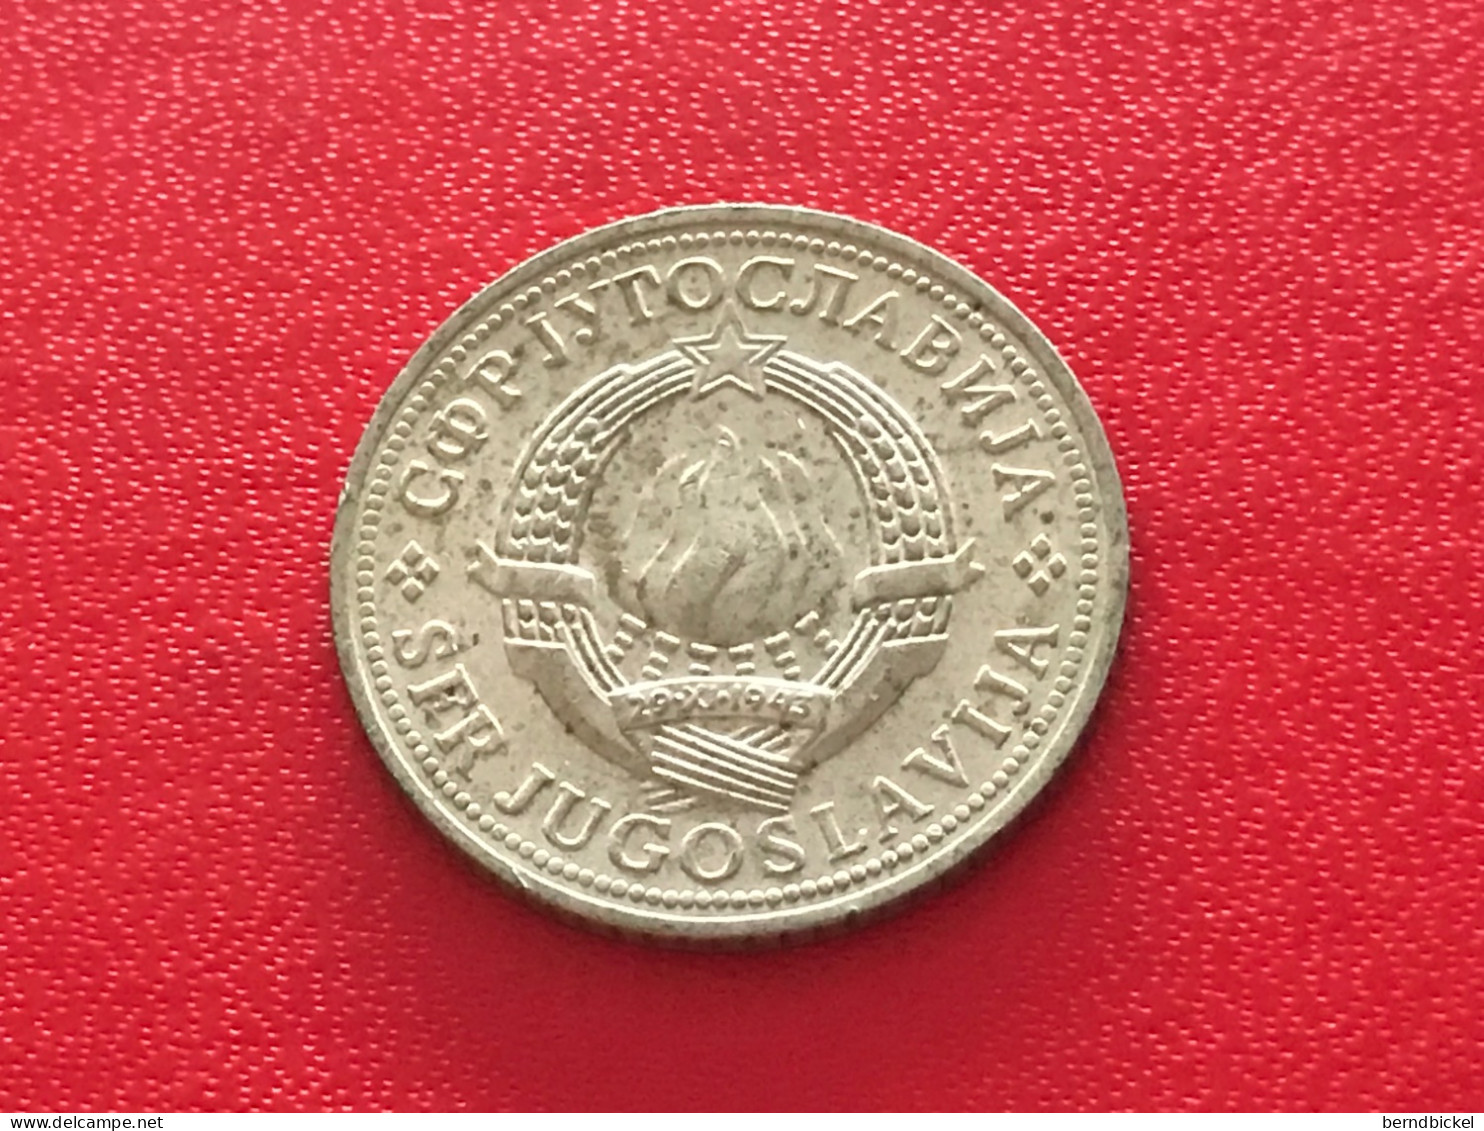 Münze Münzen Umlaufmünze Jugoslawien 2 Dinar 1978 - Jugoslawien